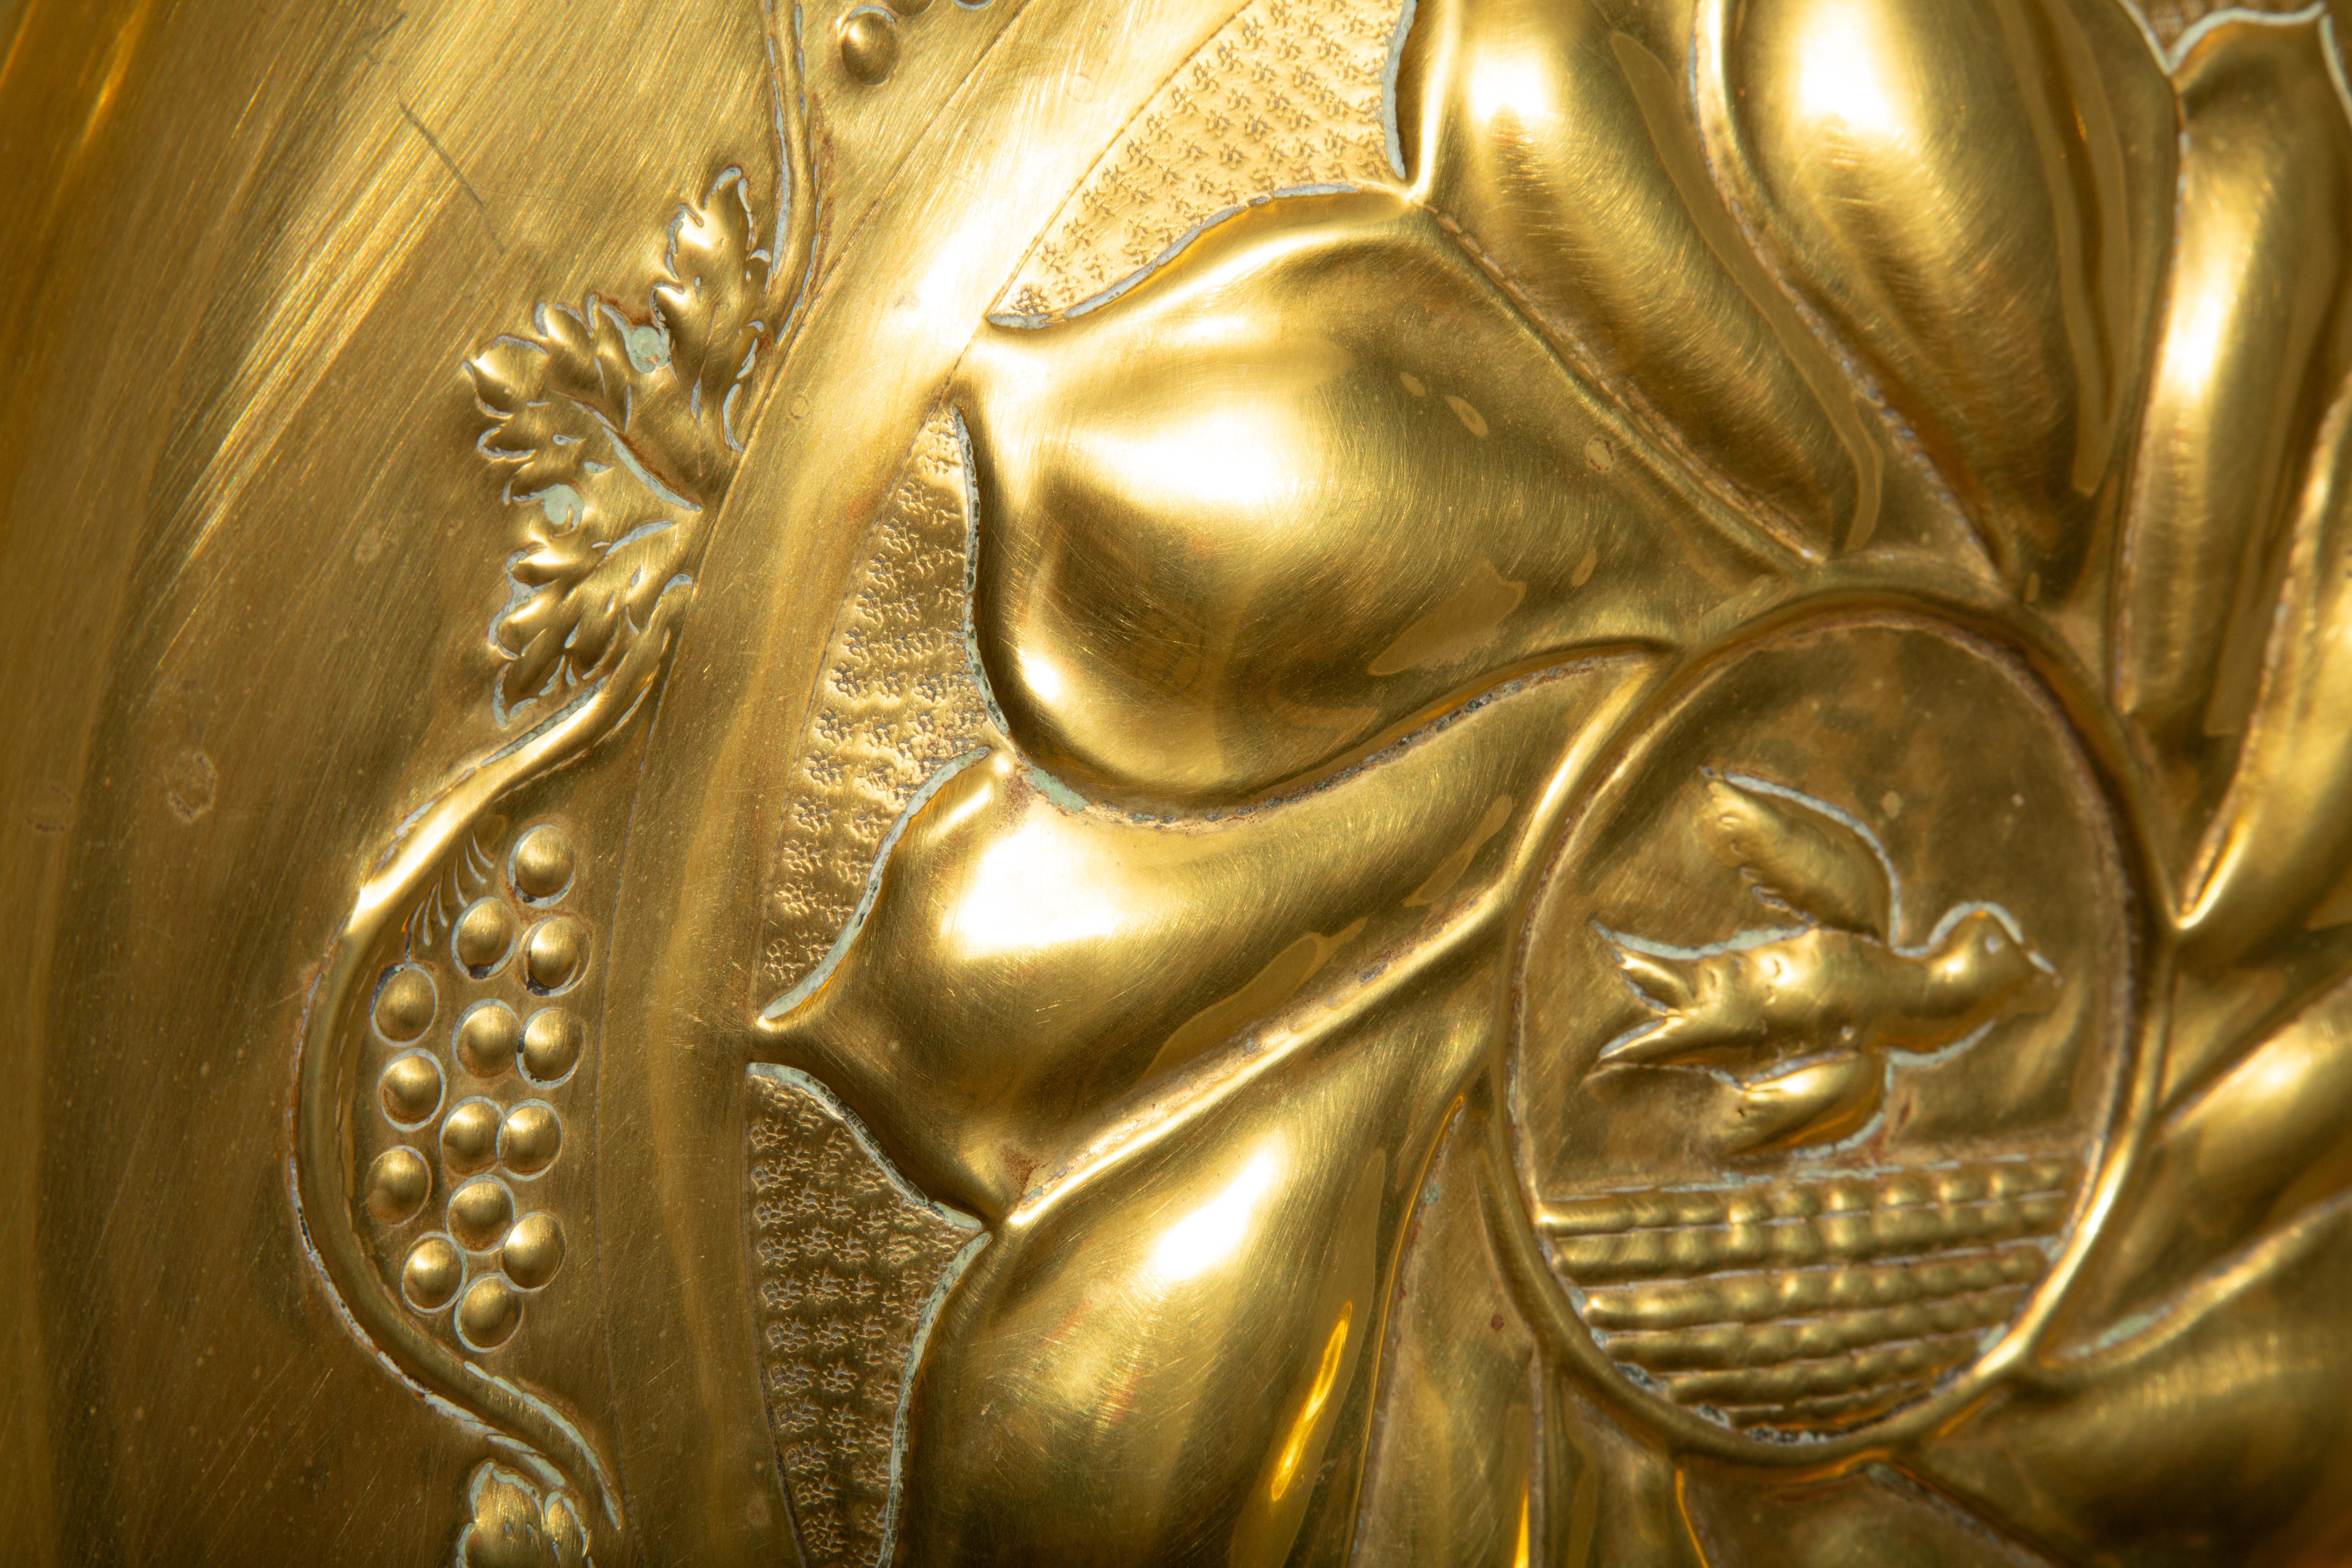 Antique 18/19th Century Ornamental Brass Alms Dish with Dove Motif (21.75